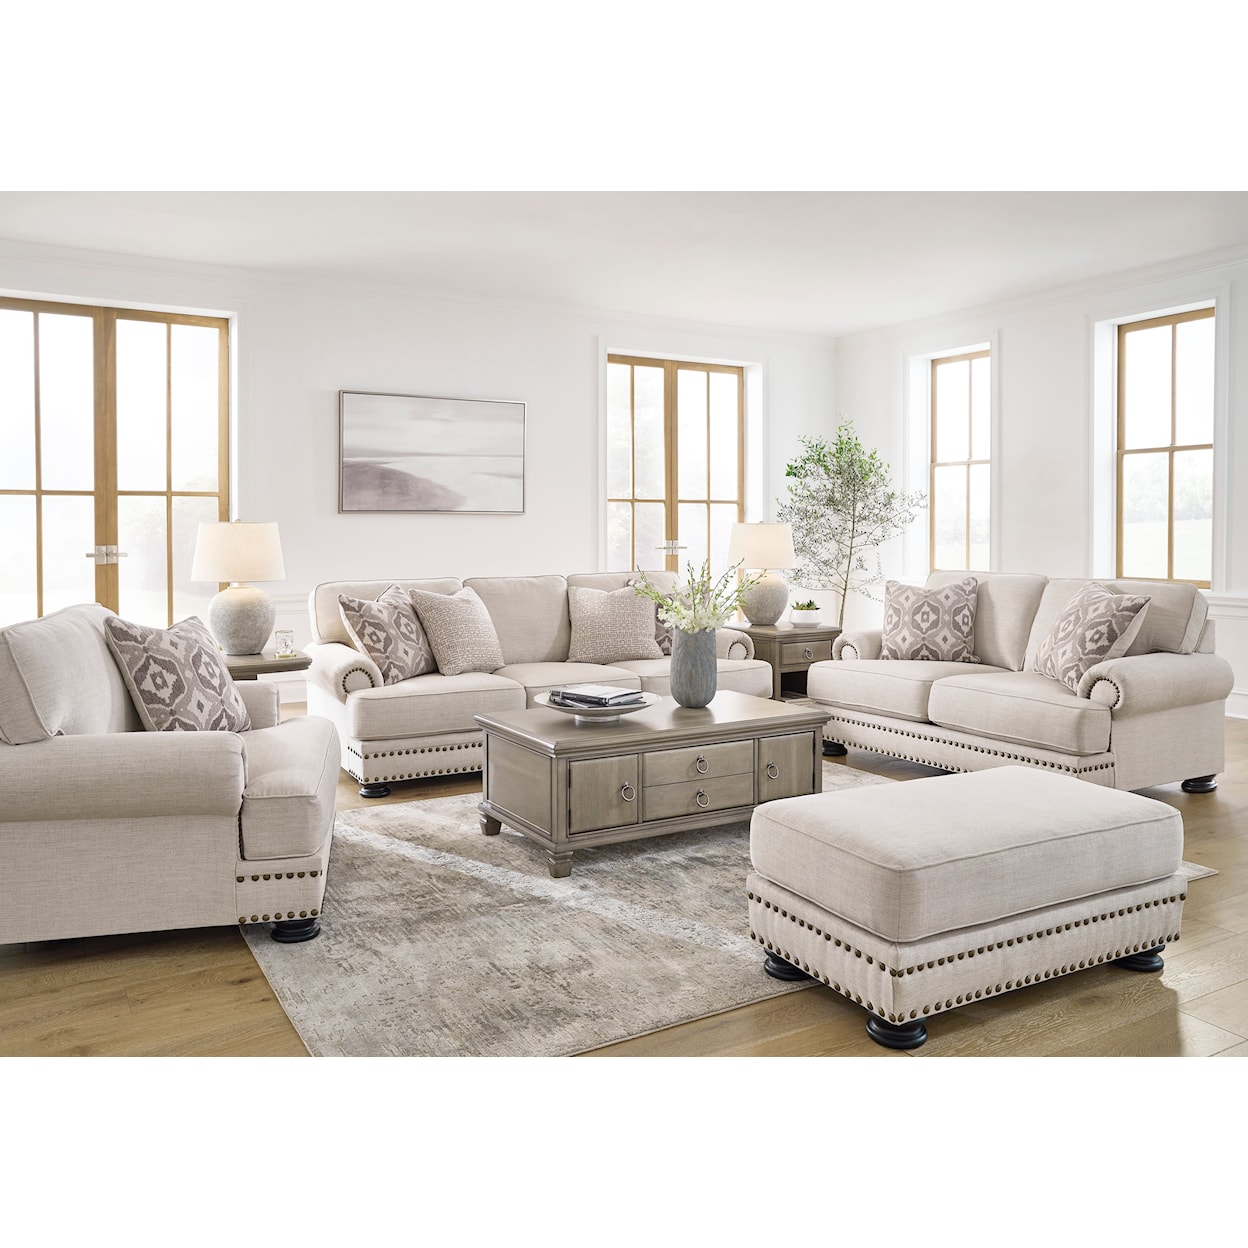 Ashley Furniture Benchcraft Merrimore 2-Piece Living Room Set